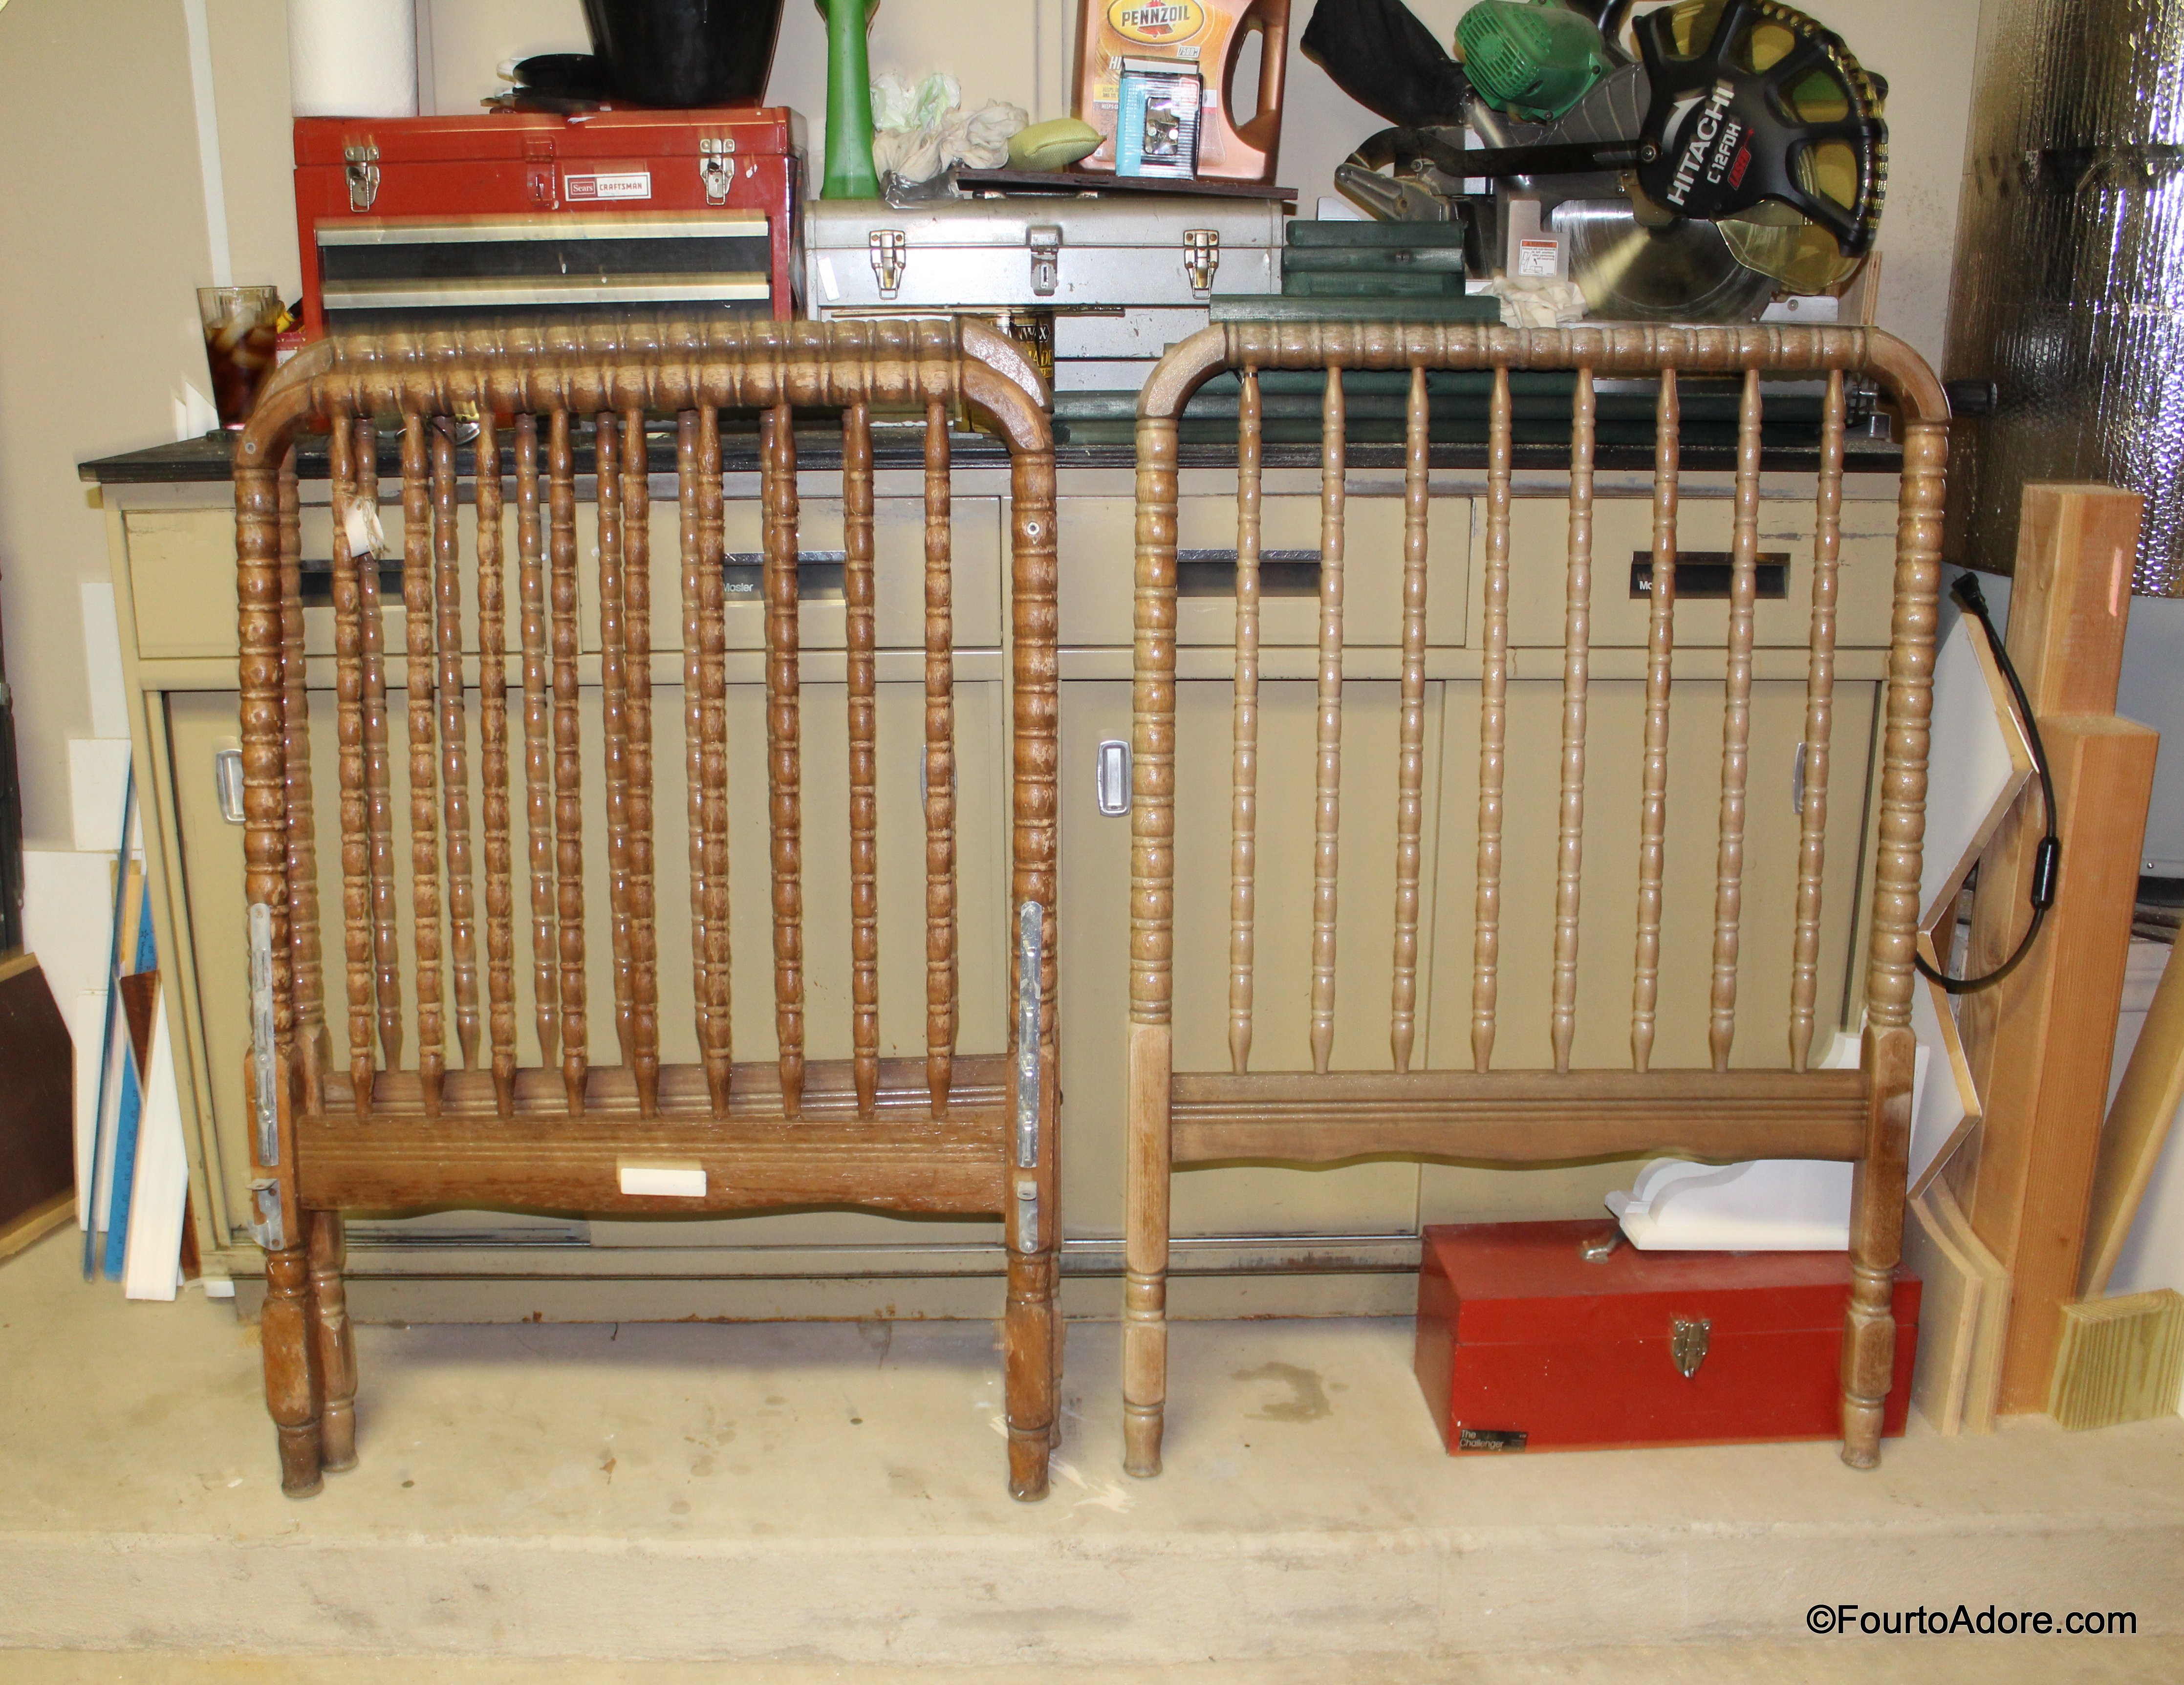 antique jenny lind crib